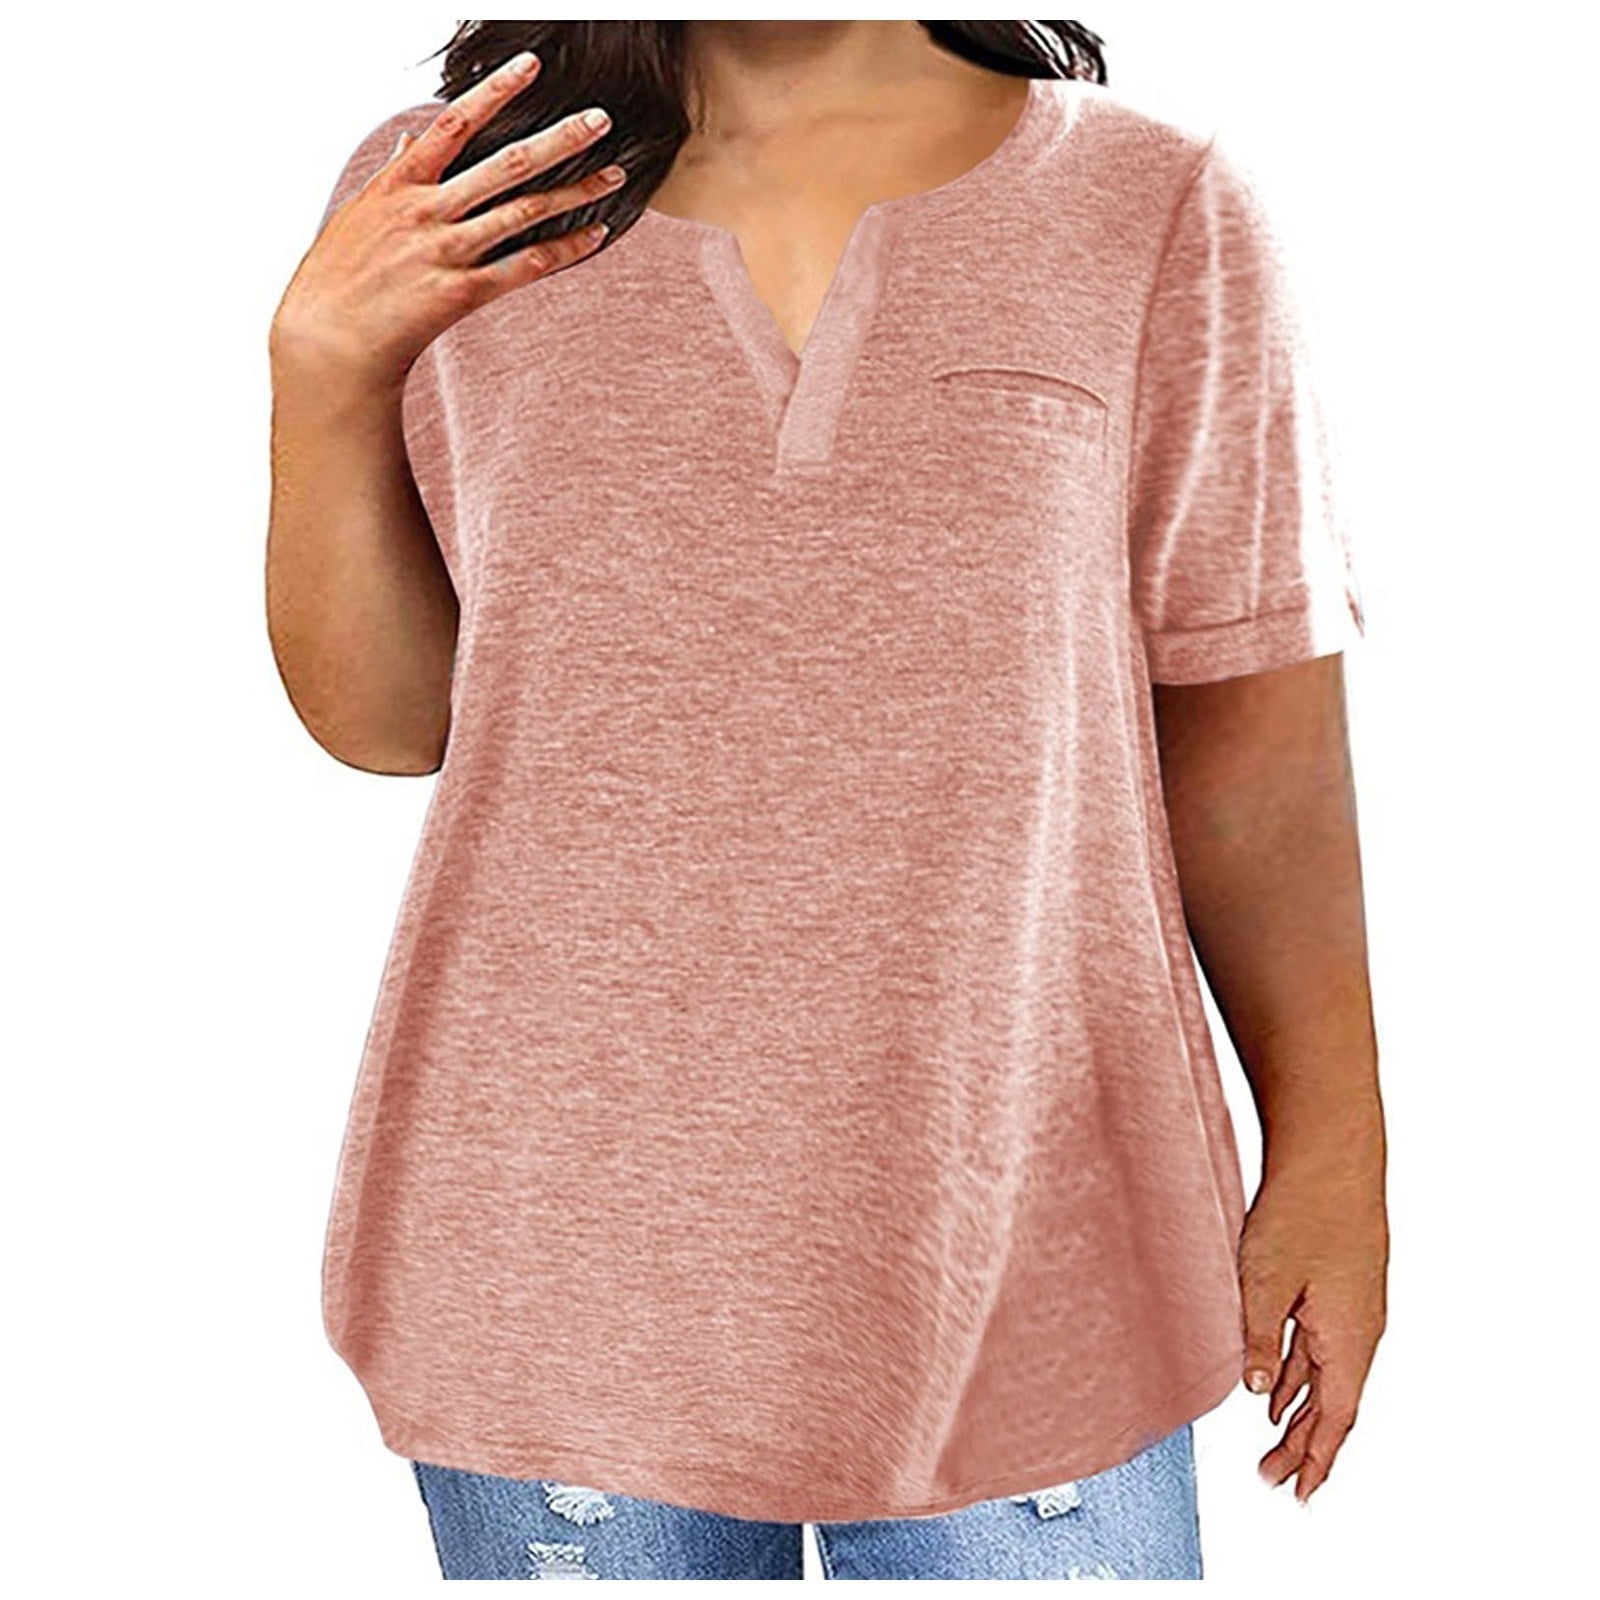 Mrat Womens T-Shirts Plus Size Tee Women V-Neck Blouse Lace Casual ...